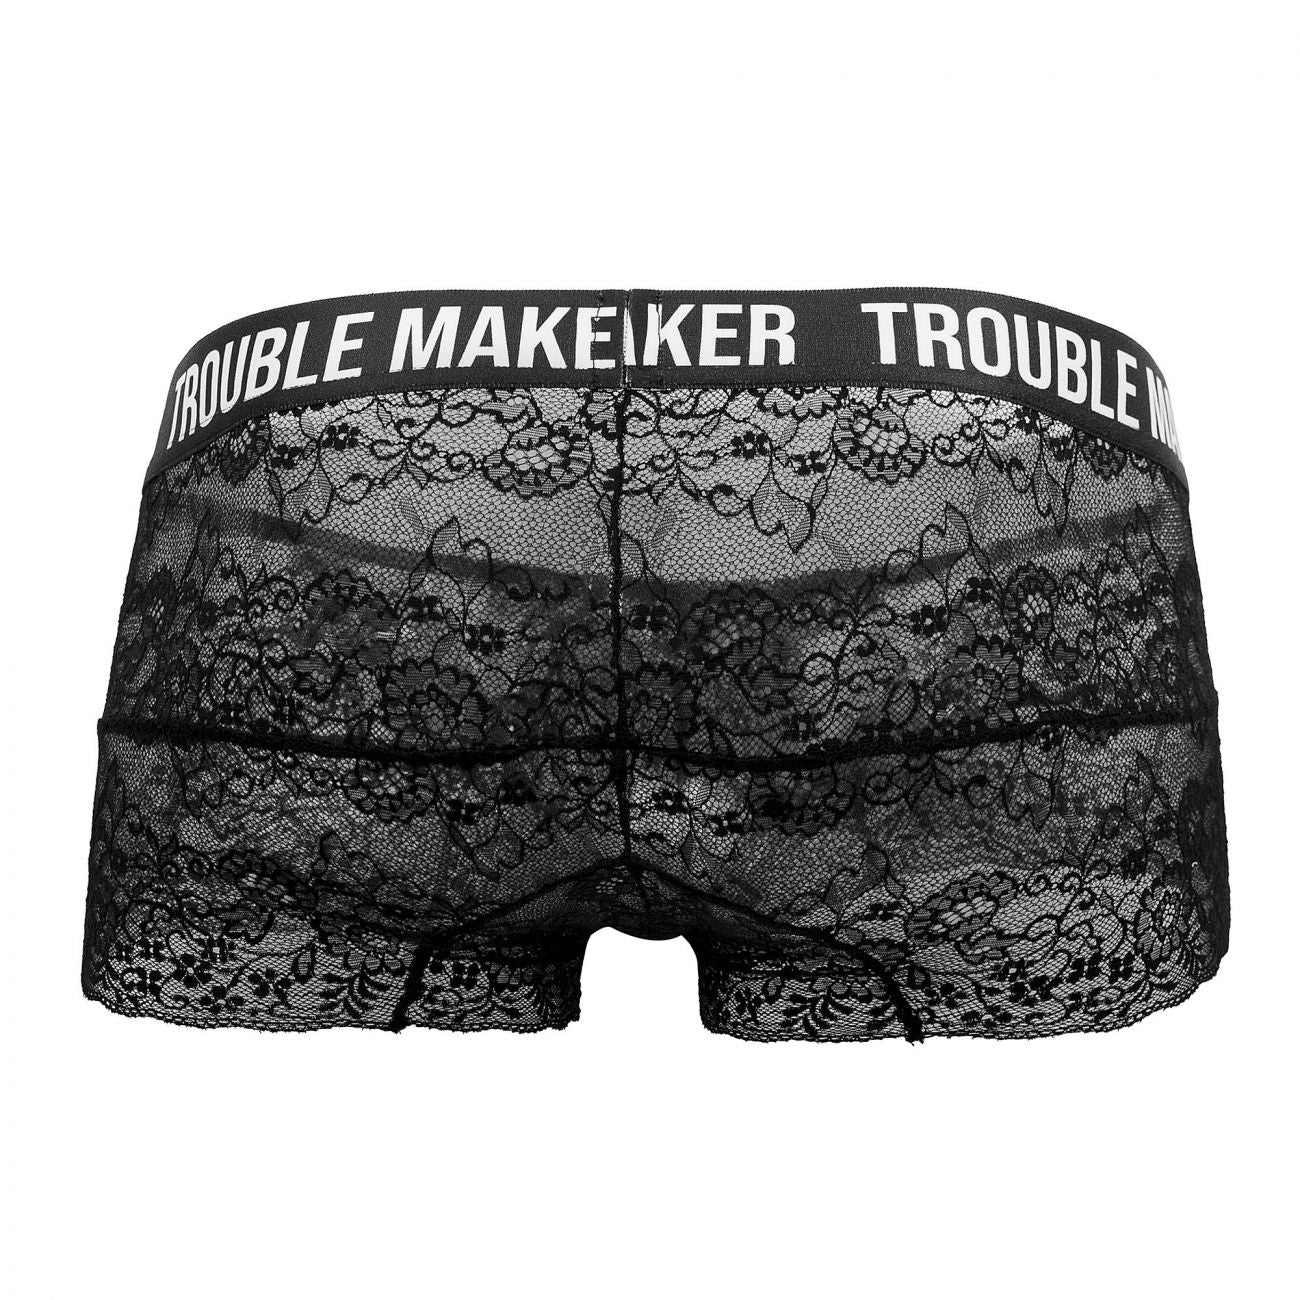 Trouble Maker Lace Trunks